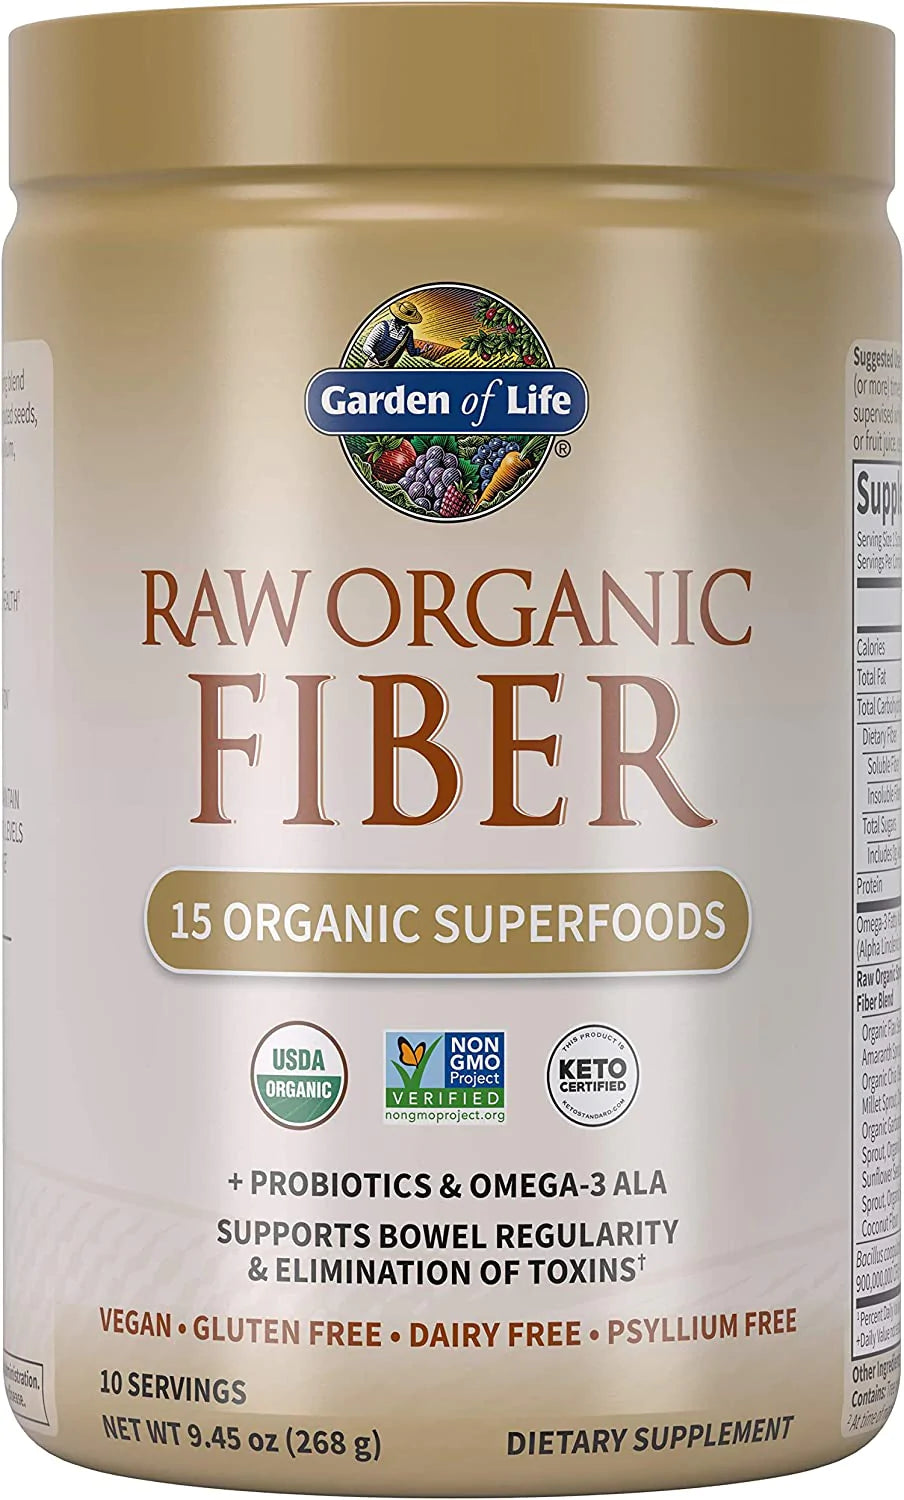 Garden of Life Fiber Supplement, Raw Organic Fiber Powder - 30 Servings, 15 Organic Superfoods, Probiotics and Omega-3 ALA, 4g Soluble Fiber, 5g Insoluble Fiber for Regularity, Psyllium Free Fiber